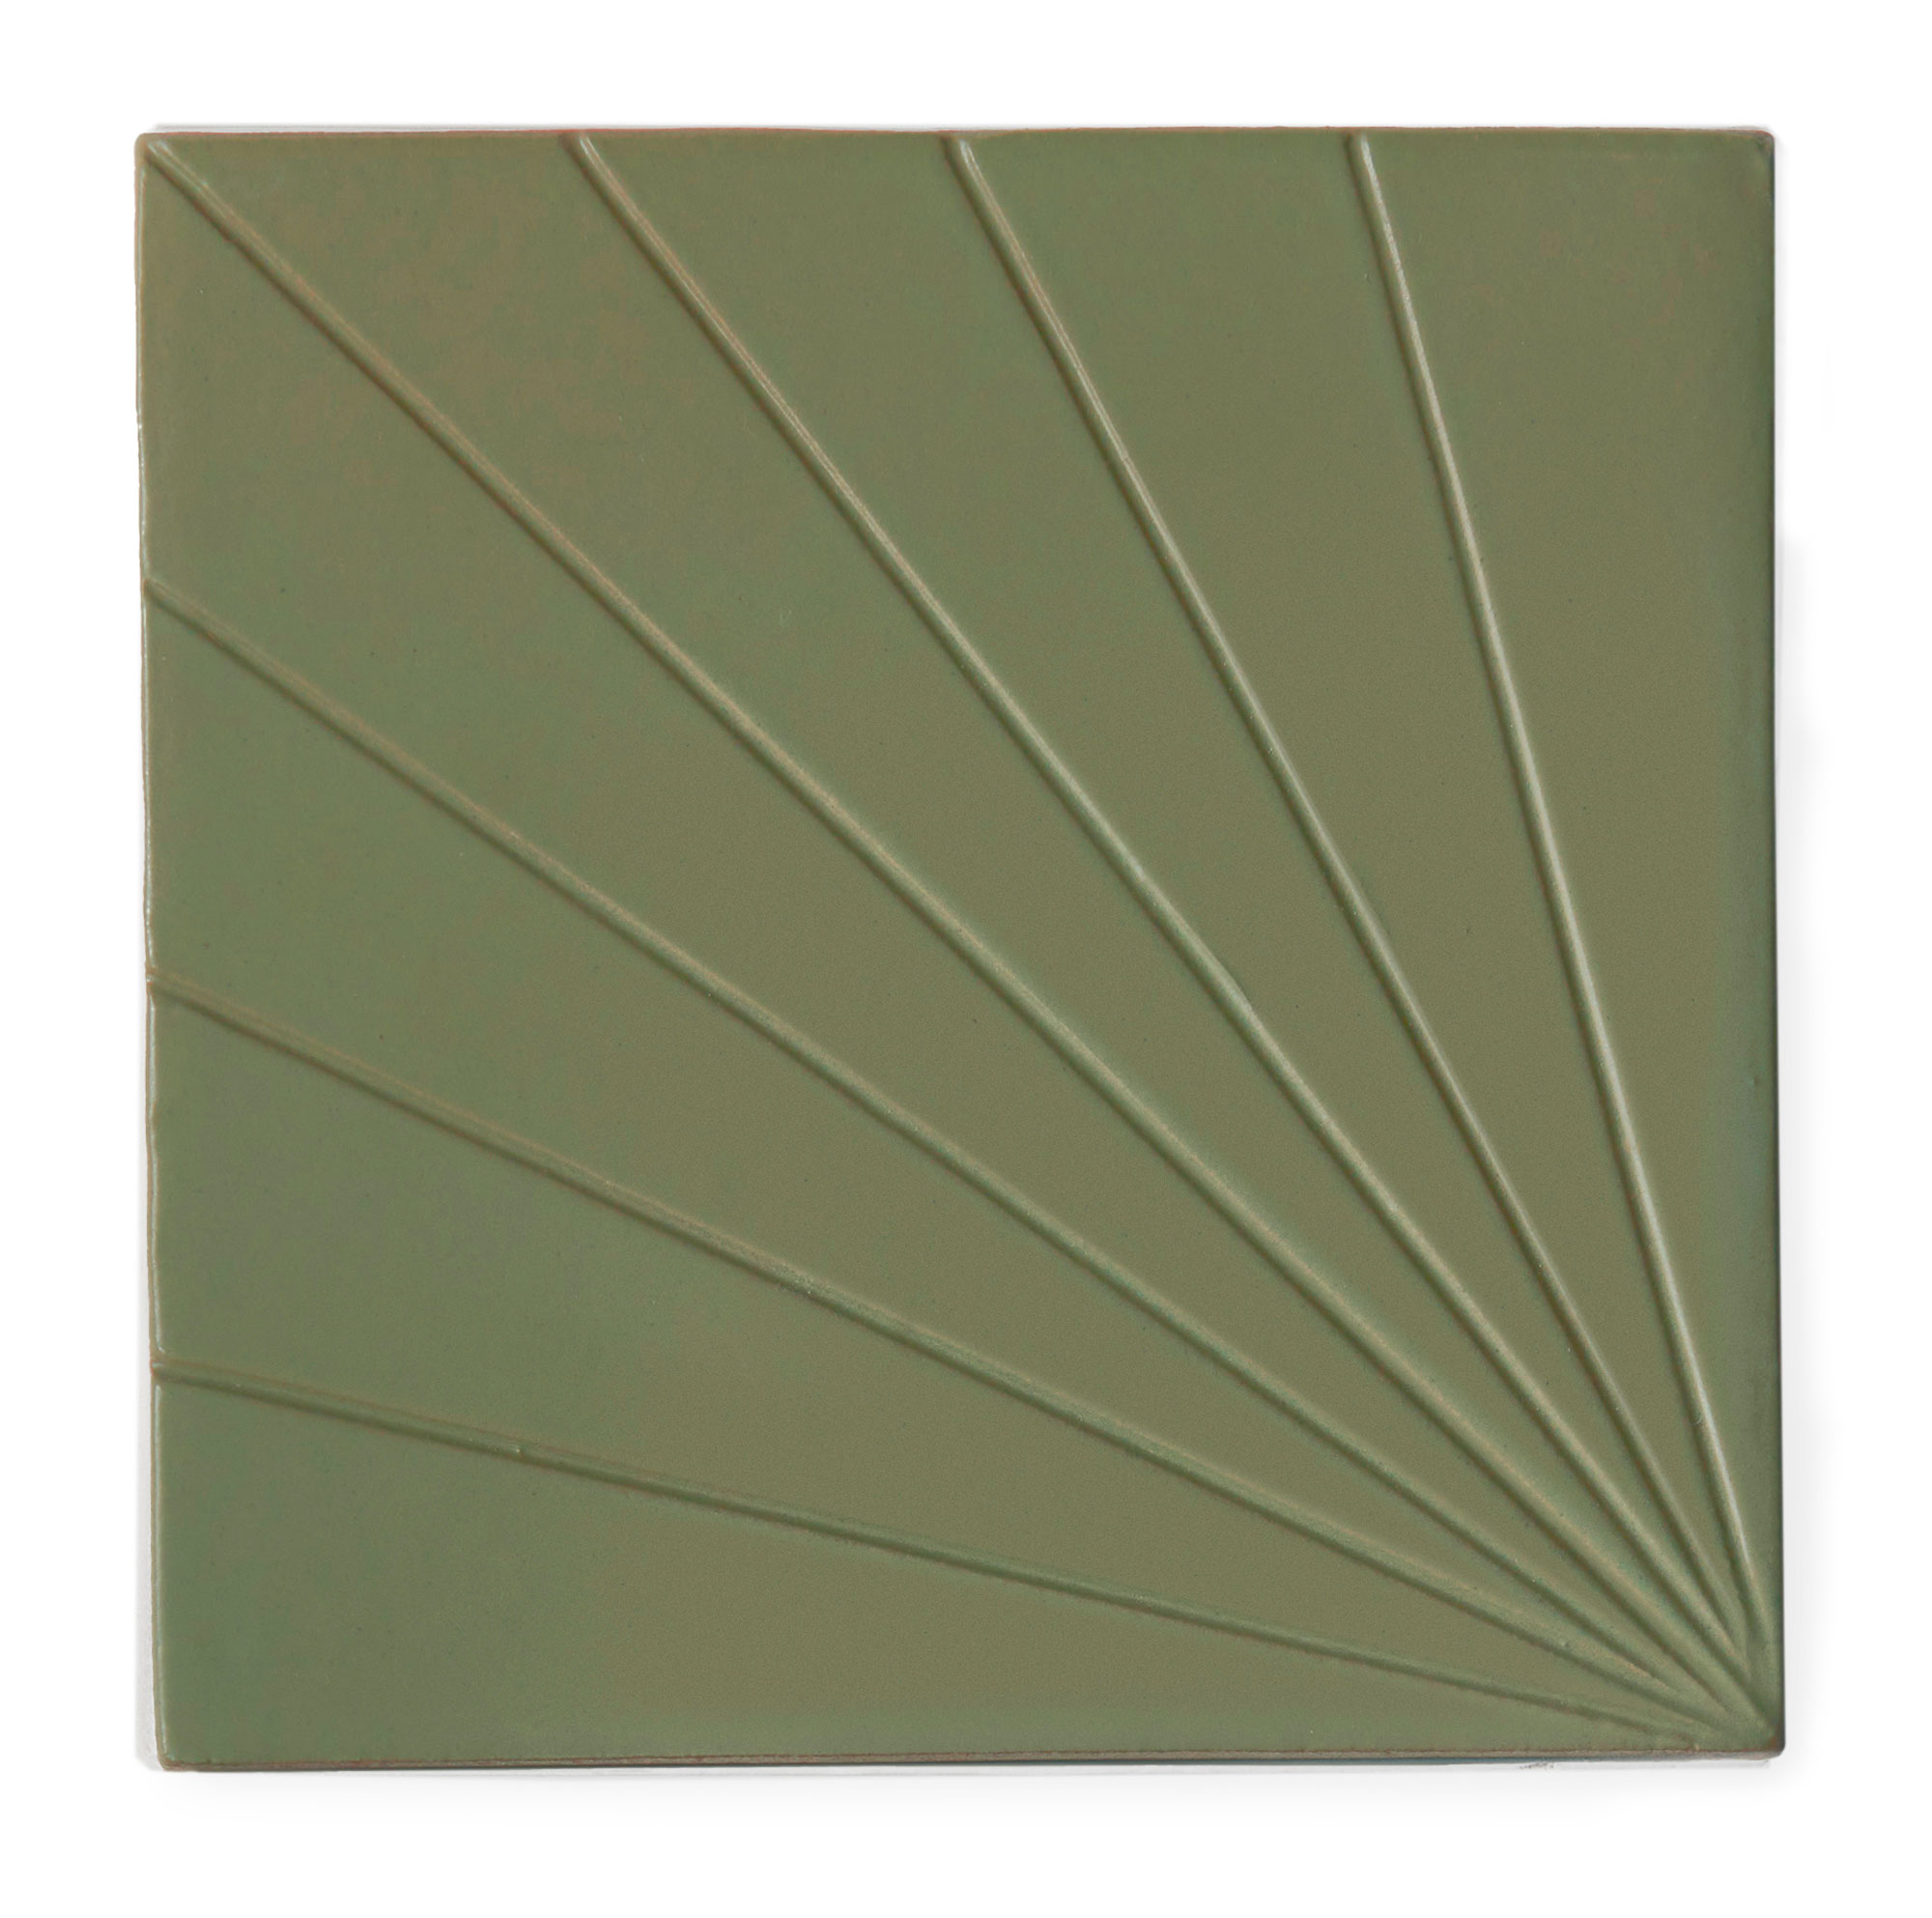 Tulum Green 6x6 - Dimensional Relief Artisan Ceramic Tile